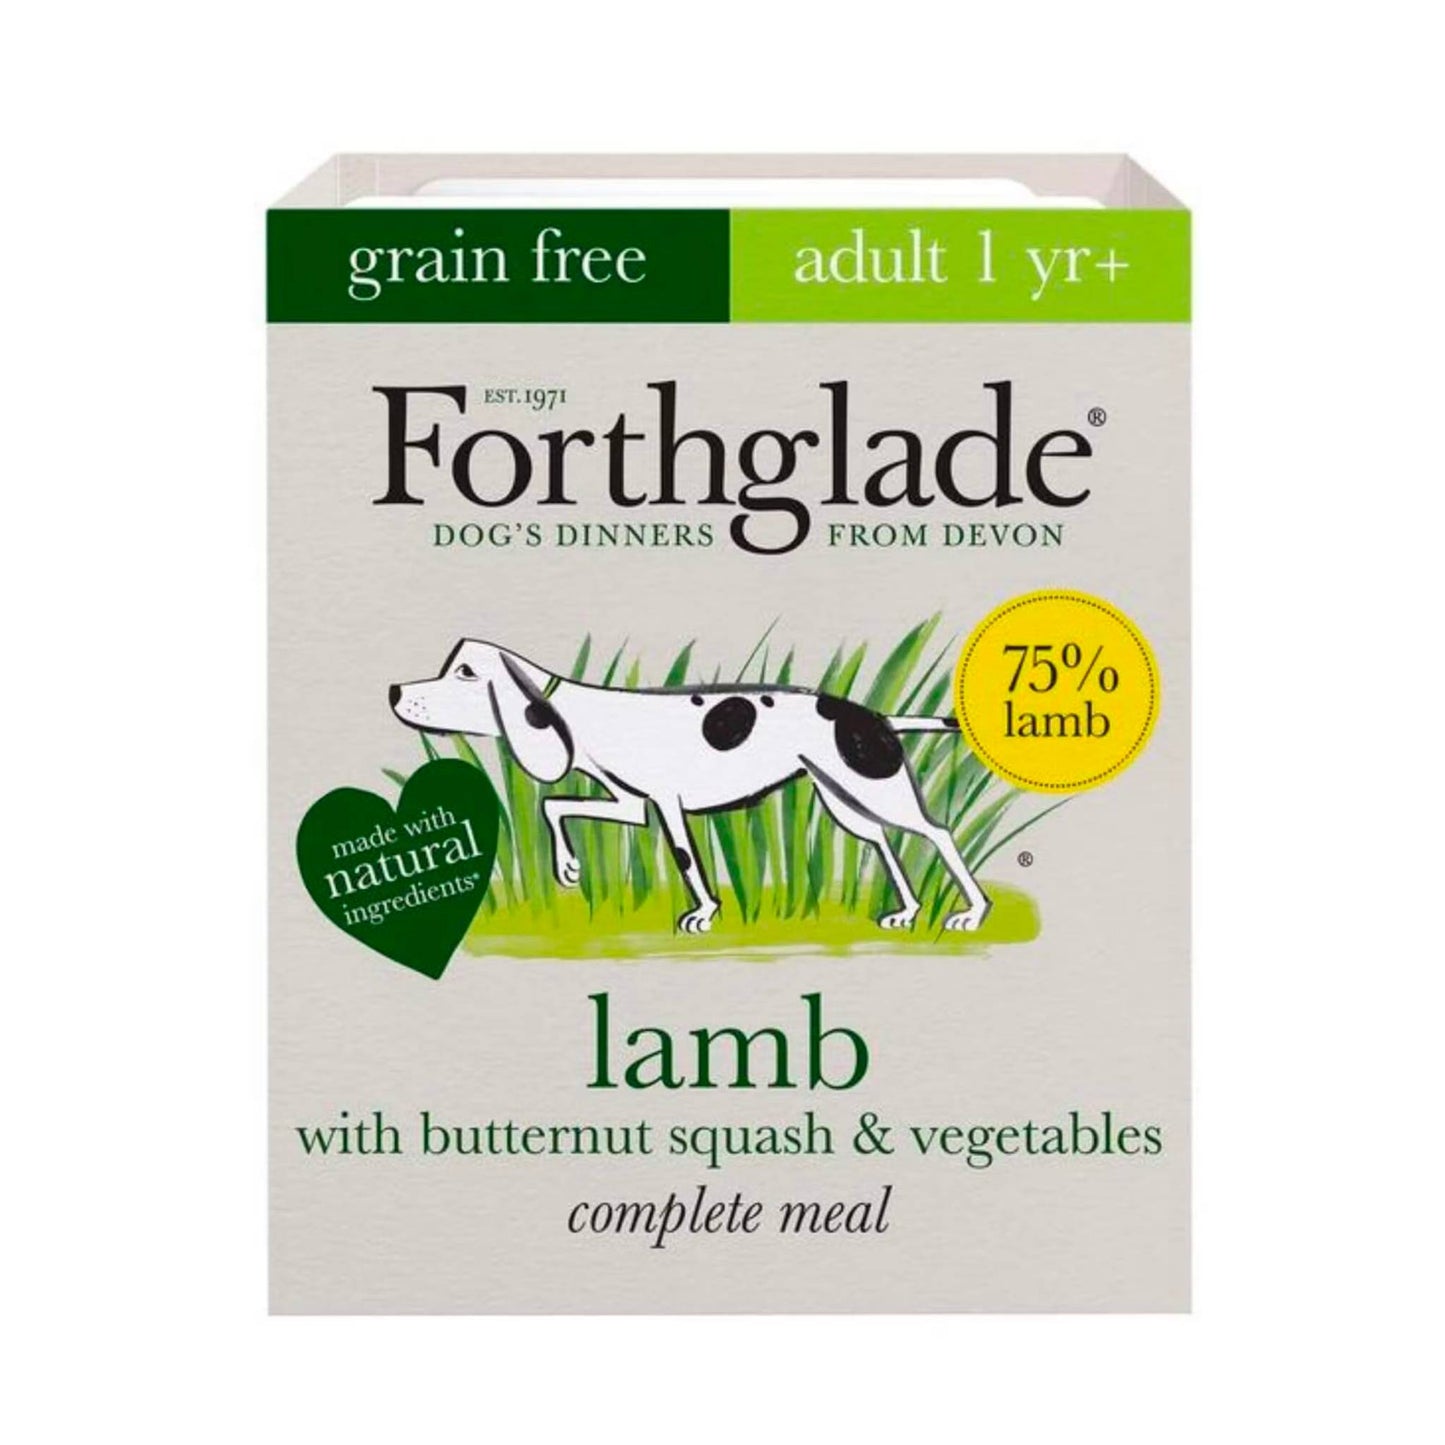 Forthglade Lamb with butternut squash & veg, adult dog food, grain free. 